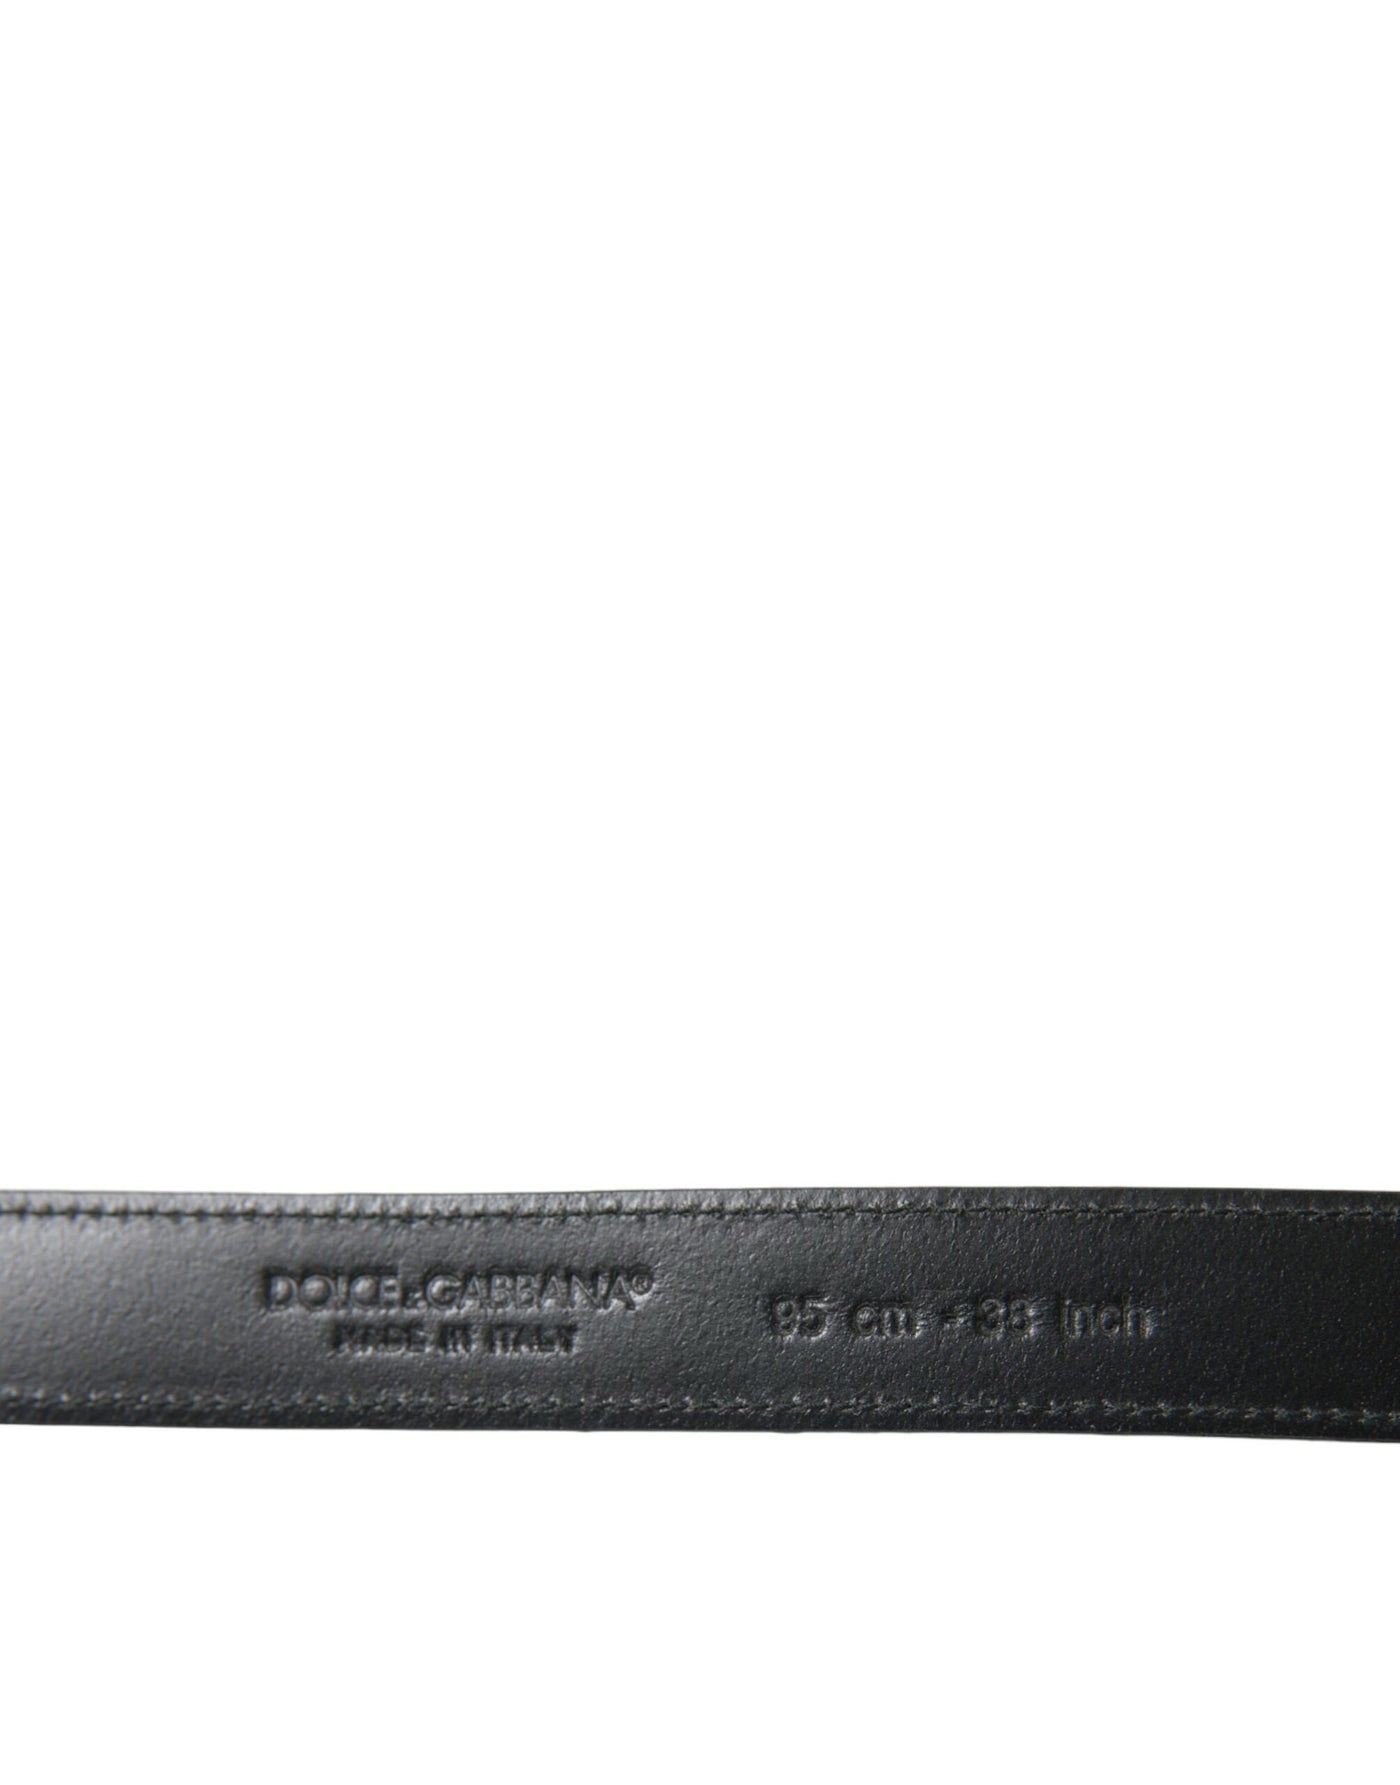 Dolce & Gabbana Black Leather Silver Metal Buckle Belt